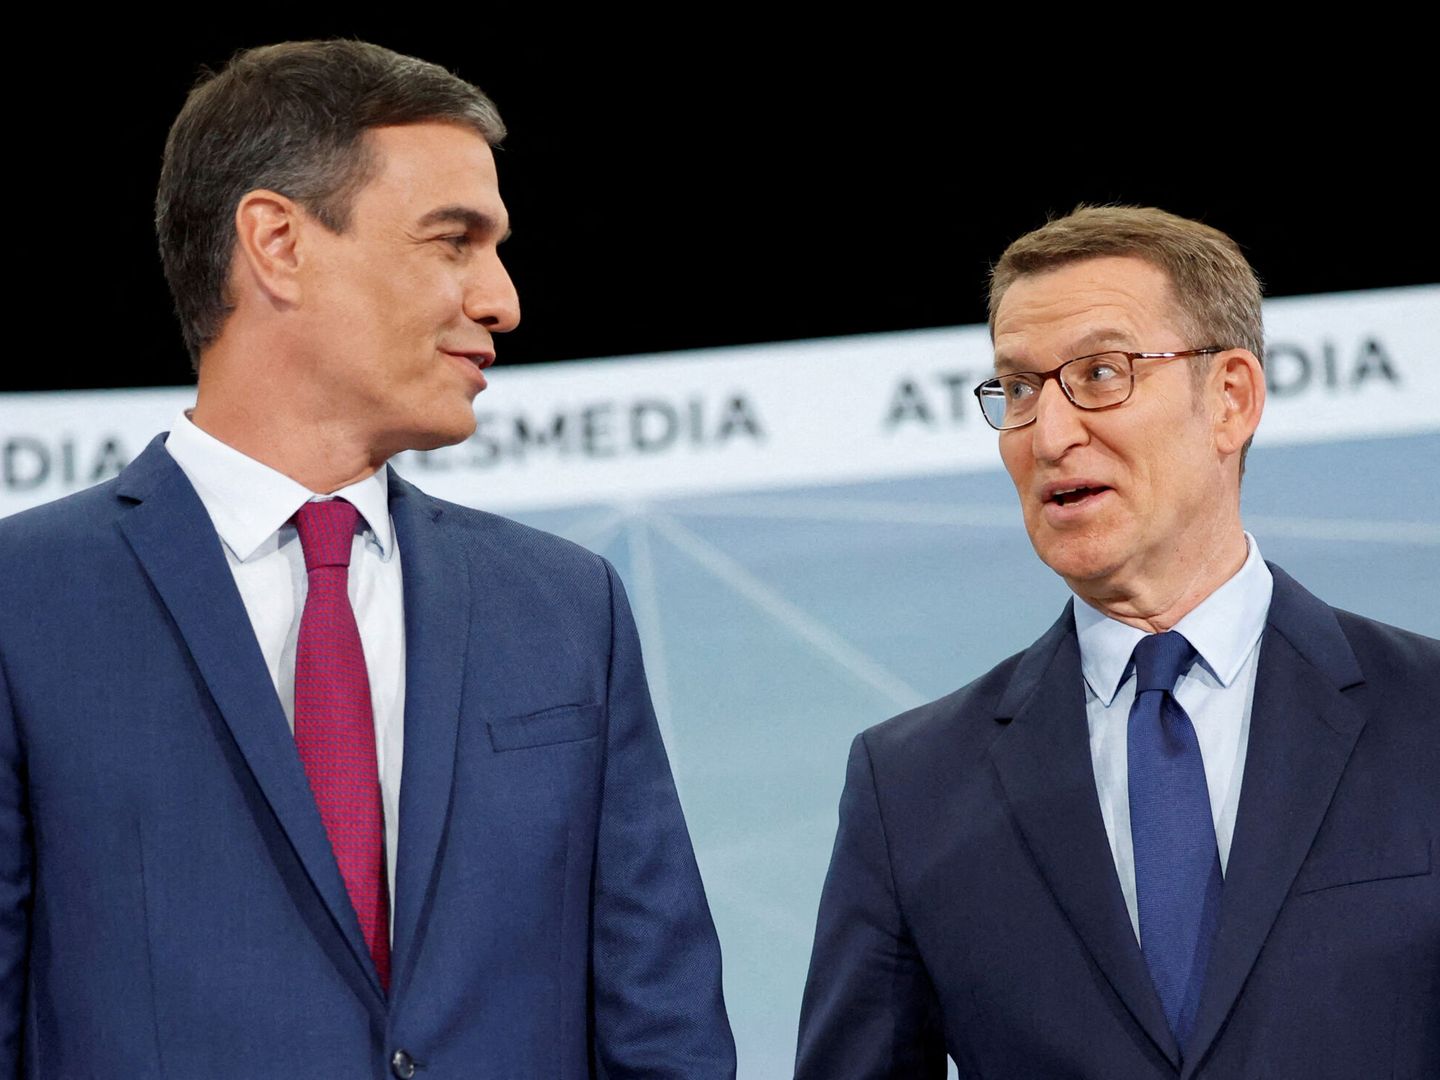 Pedro Sánchez y Alberto Núñez Feijóo, en el cara a cara. (Reuters/Juan Medina)